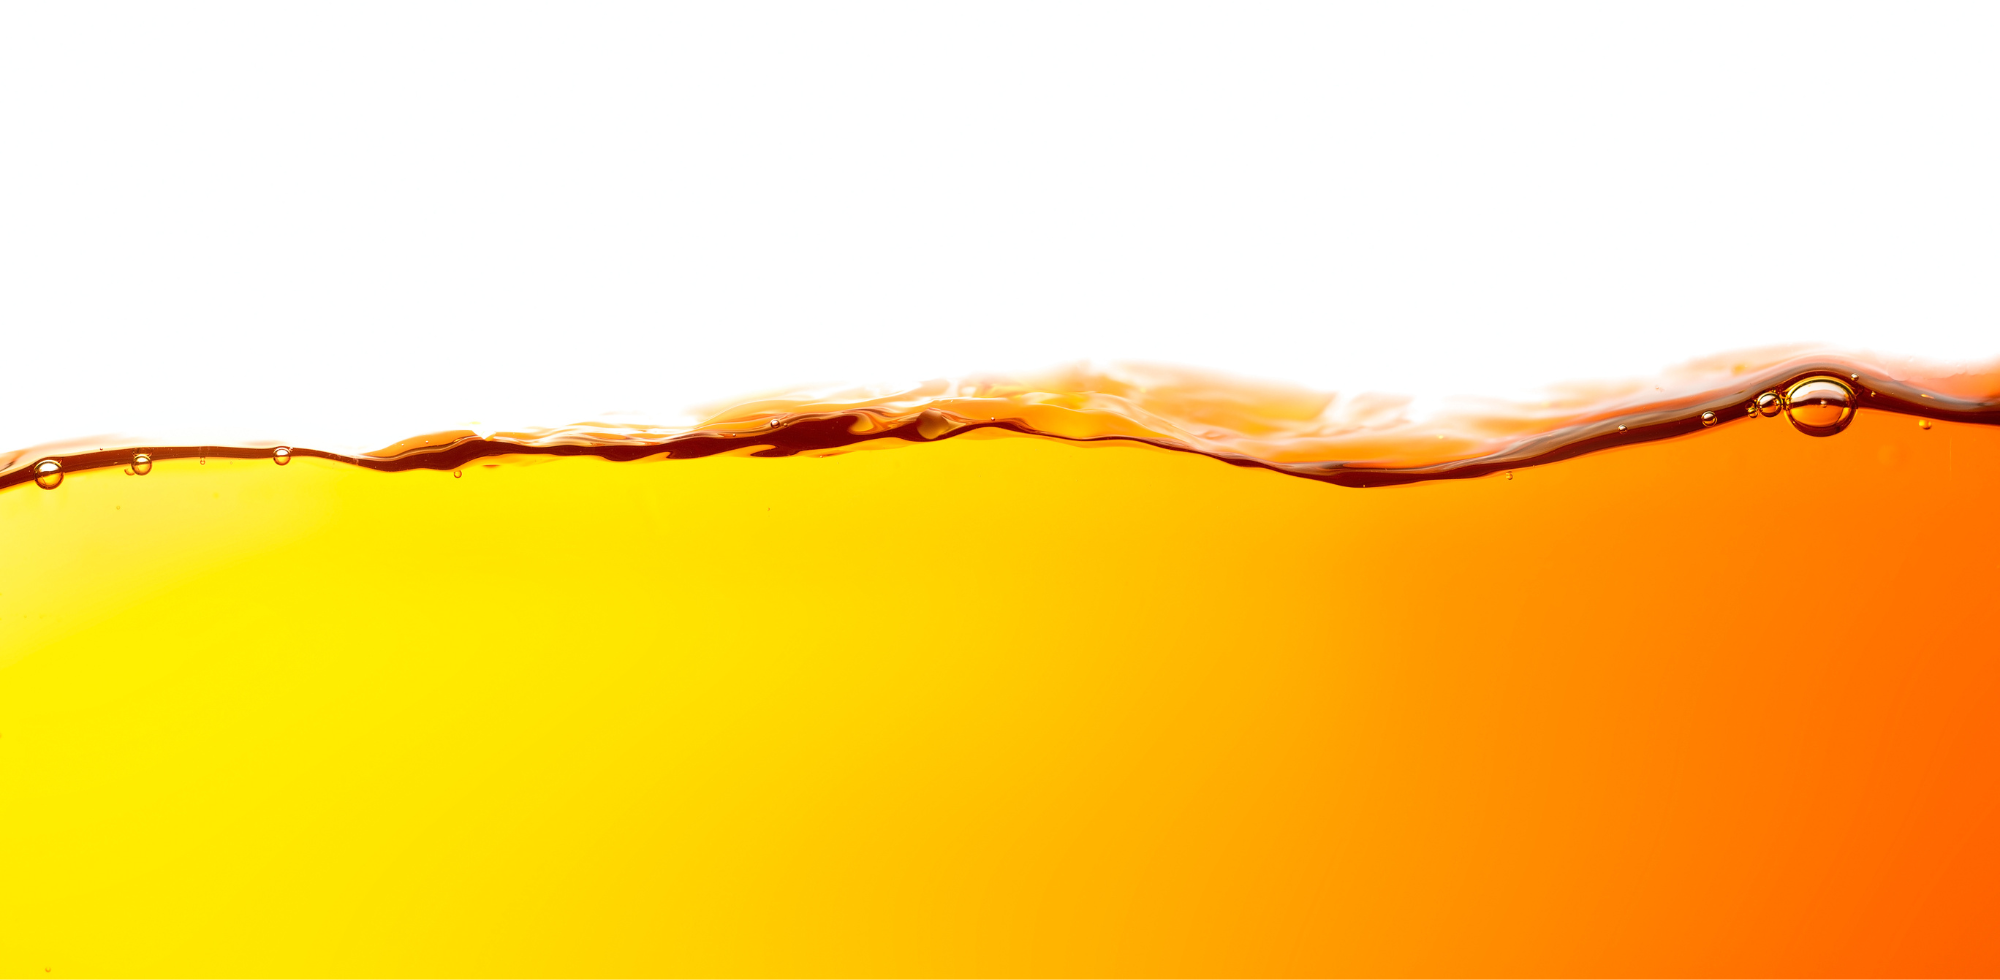 purified CBD oil in liquidy form